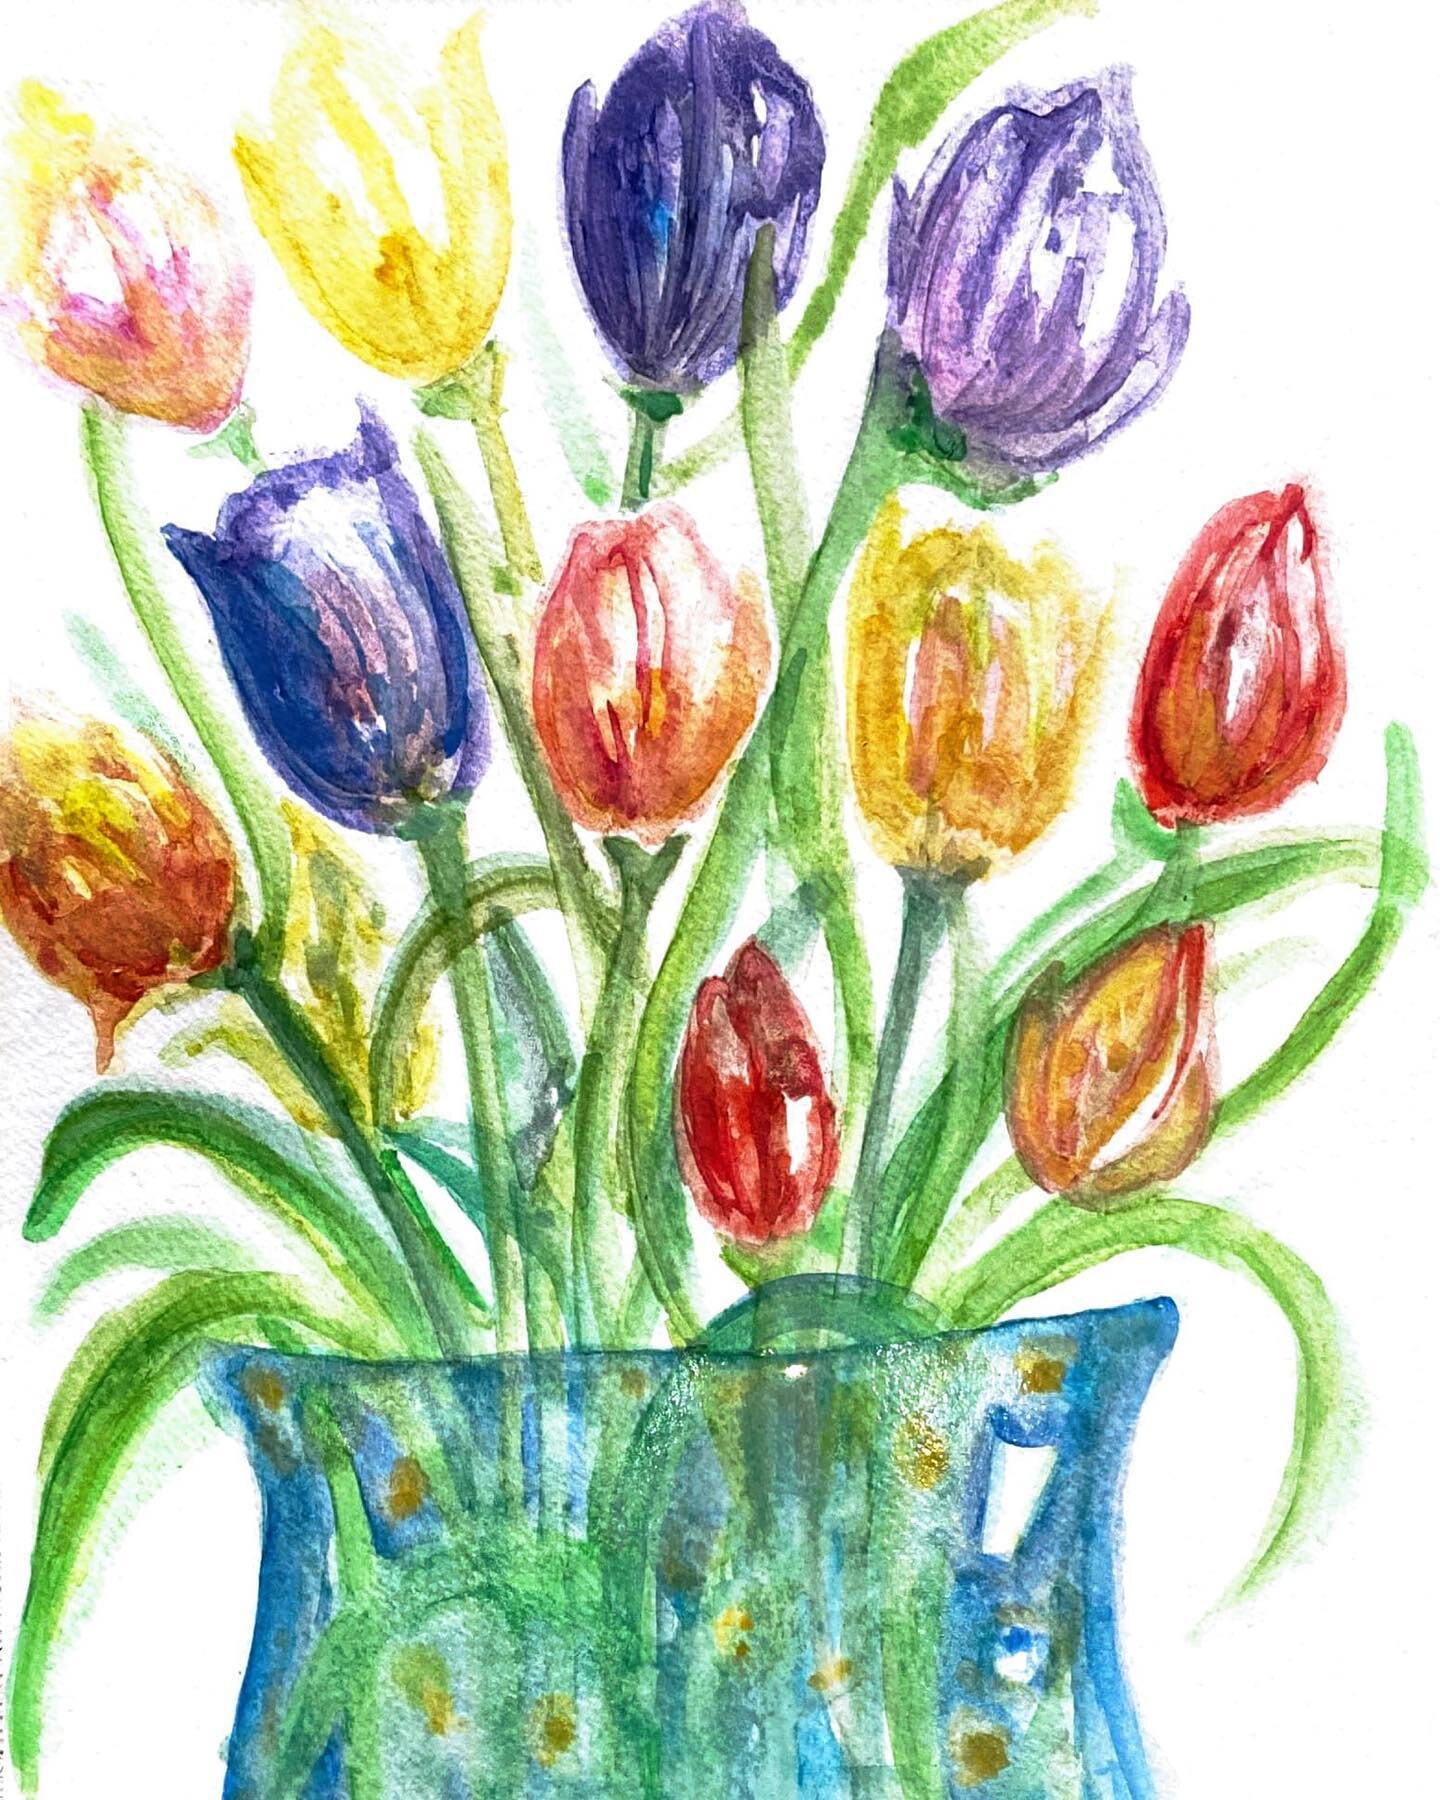 &ldquo;Treasure Tulips&rdquo; (2021) 💐🌷
.
.
 #watercolours #ashebickillustrations #quirkyart #tulips #tulippainting #artist #illustrator #amsterdam #amsterdamcity #colorful #art #flowers #stilllife #watercolourstudy #arttherapy 
&copy;️ Ashleigh Bi